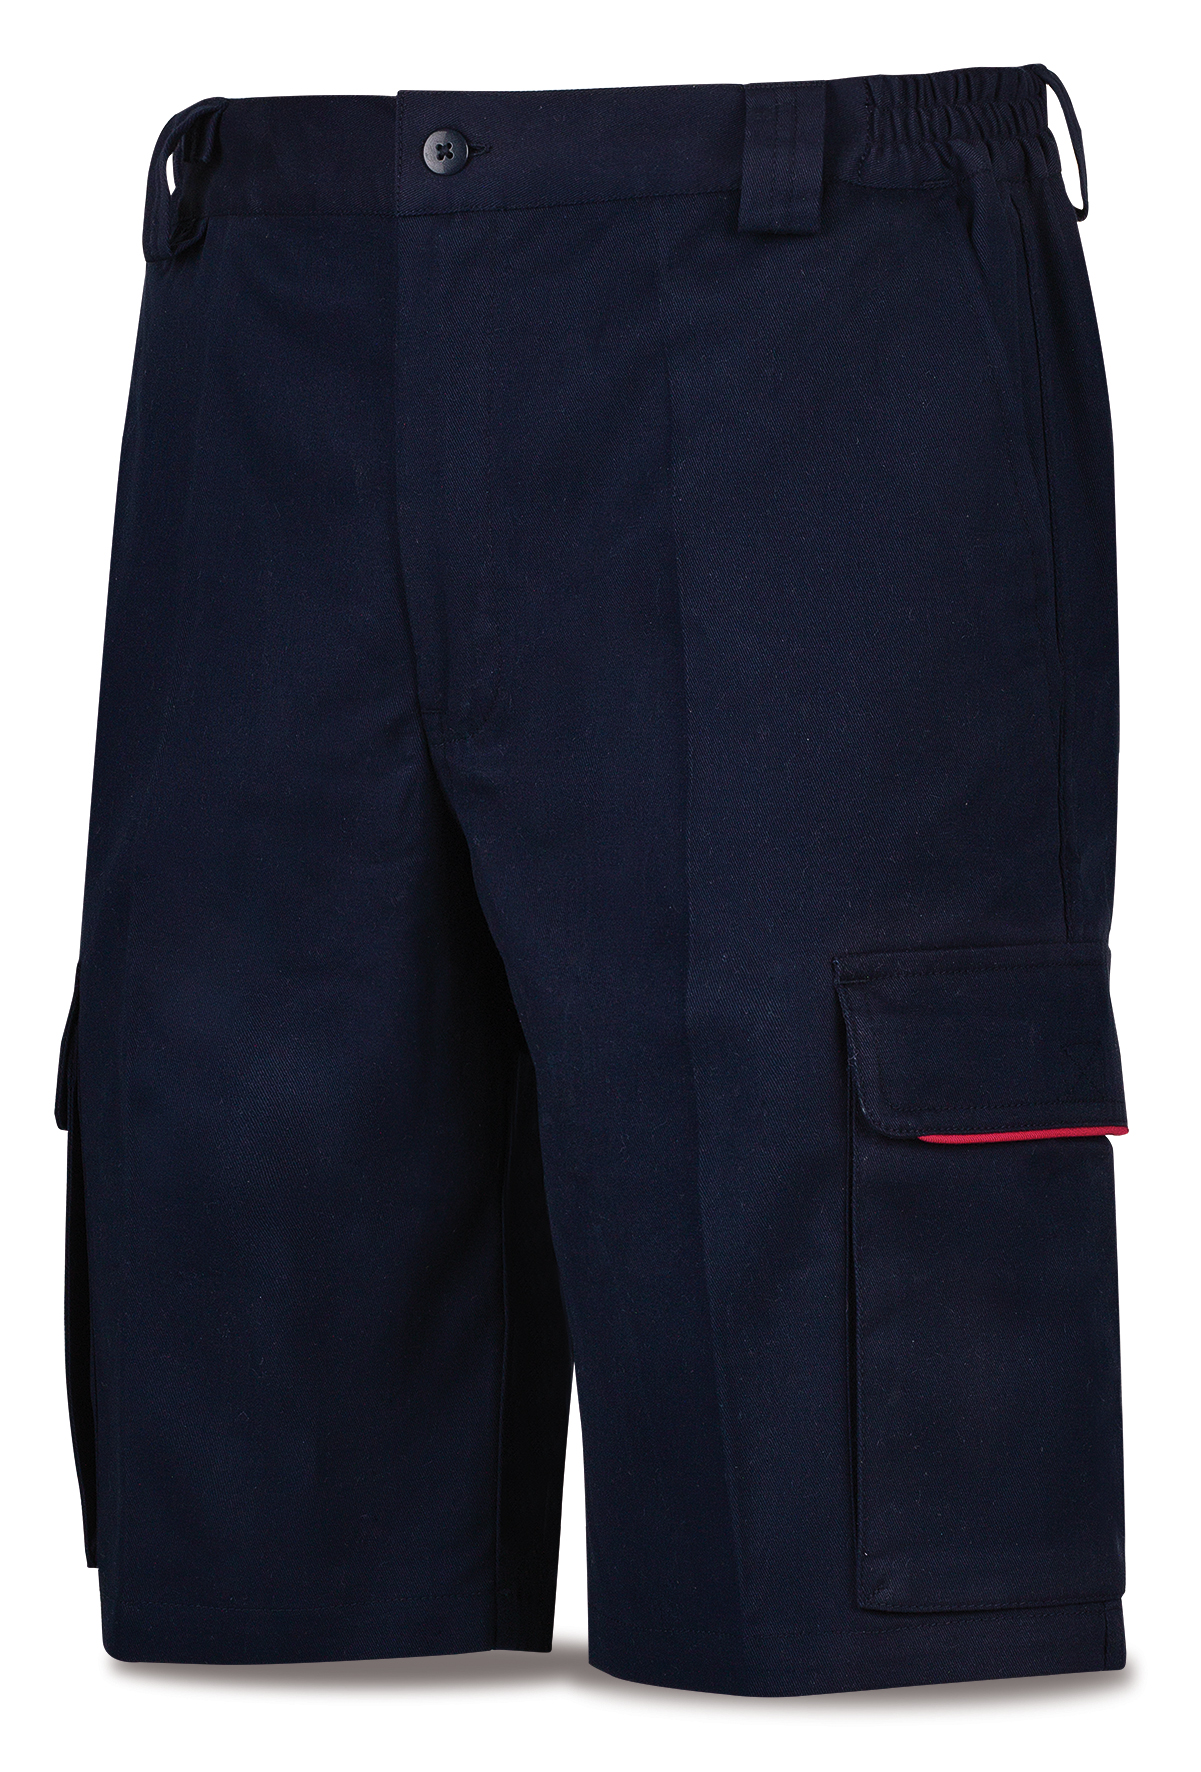 588SBSAMR Workwear Casual Series Basic STRETCH Bermuda shorts navy blue/red cotton 240 gr.